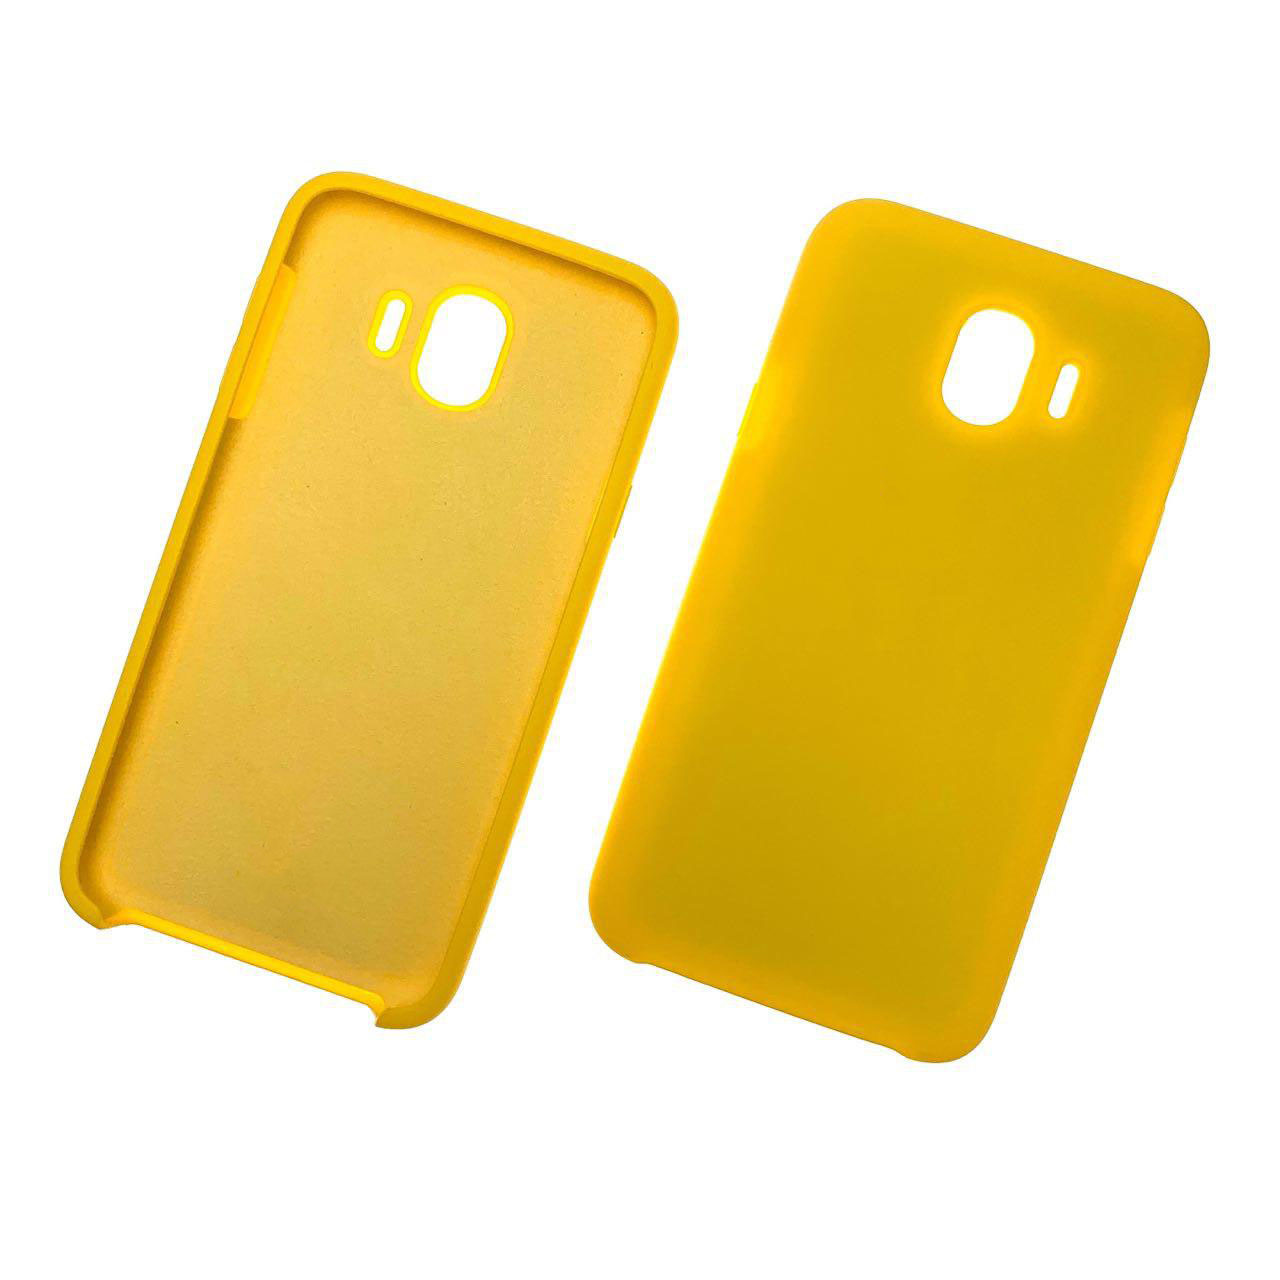 Чехол накладка Silicon Cover для SAMSUNG Galaxy J4 2018 (SM-J400), силикон, бархат, цвет желтый.